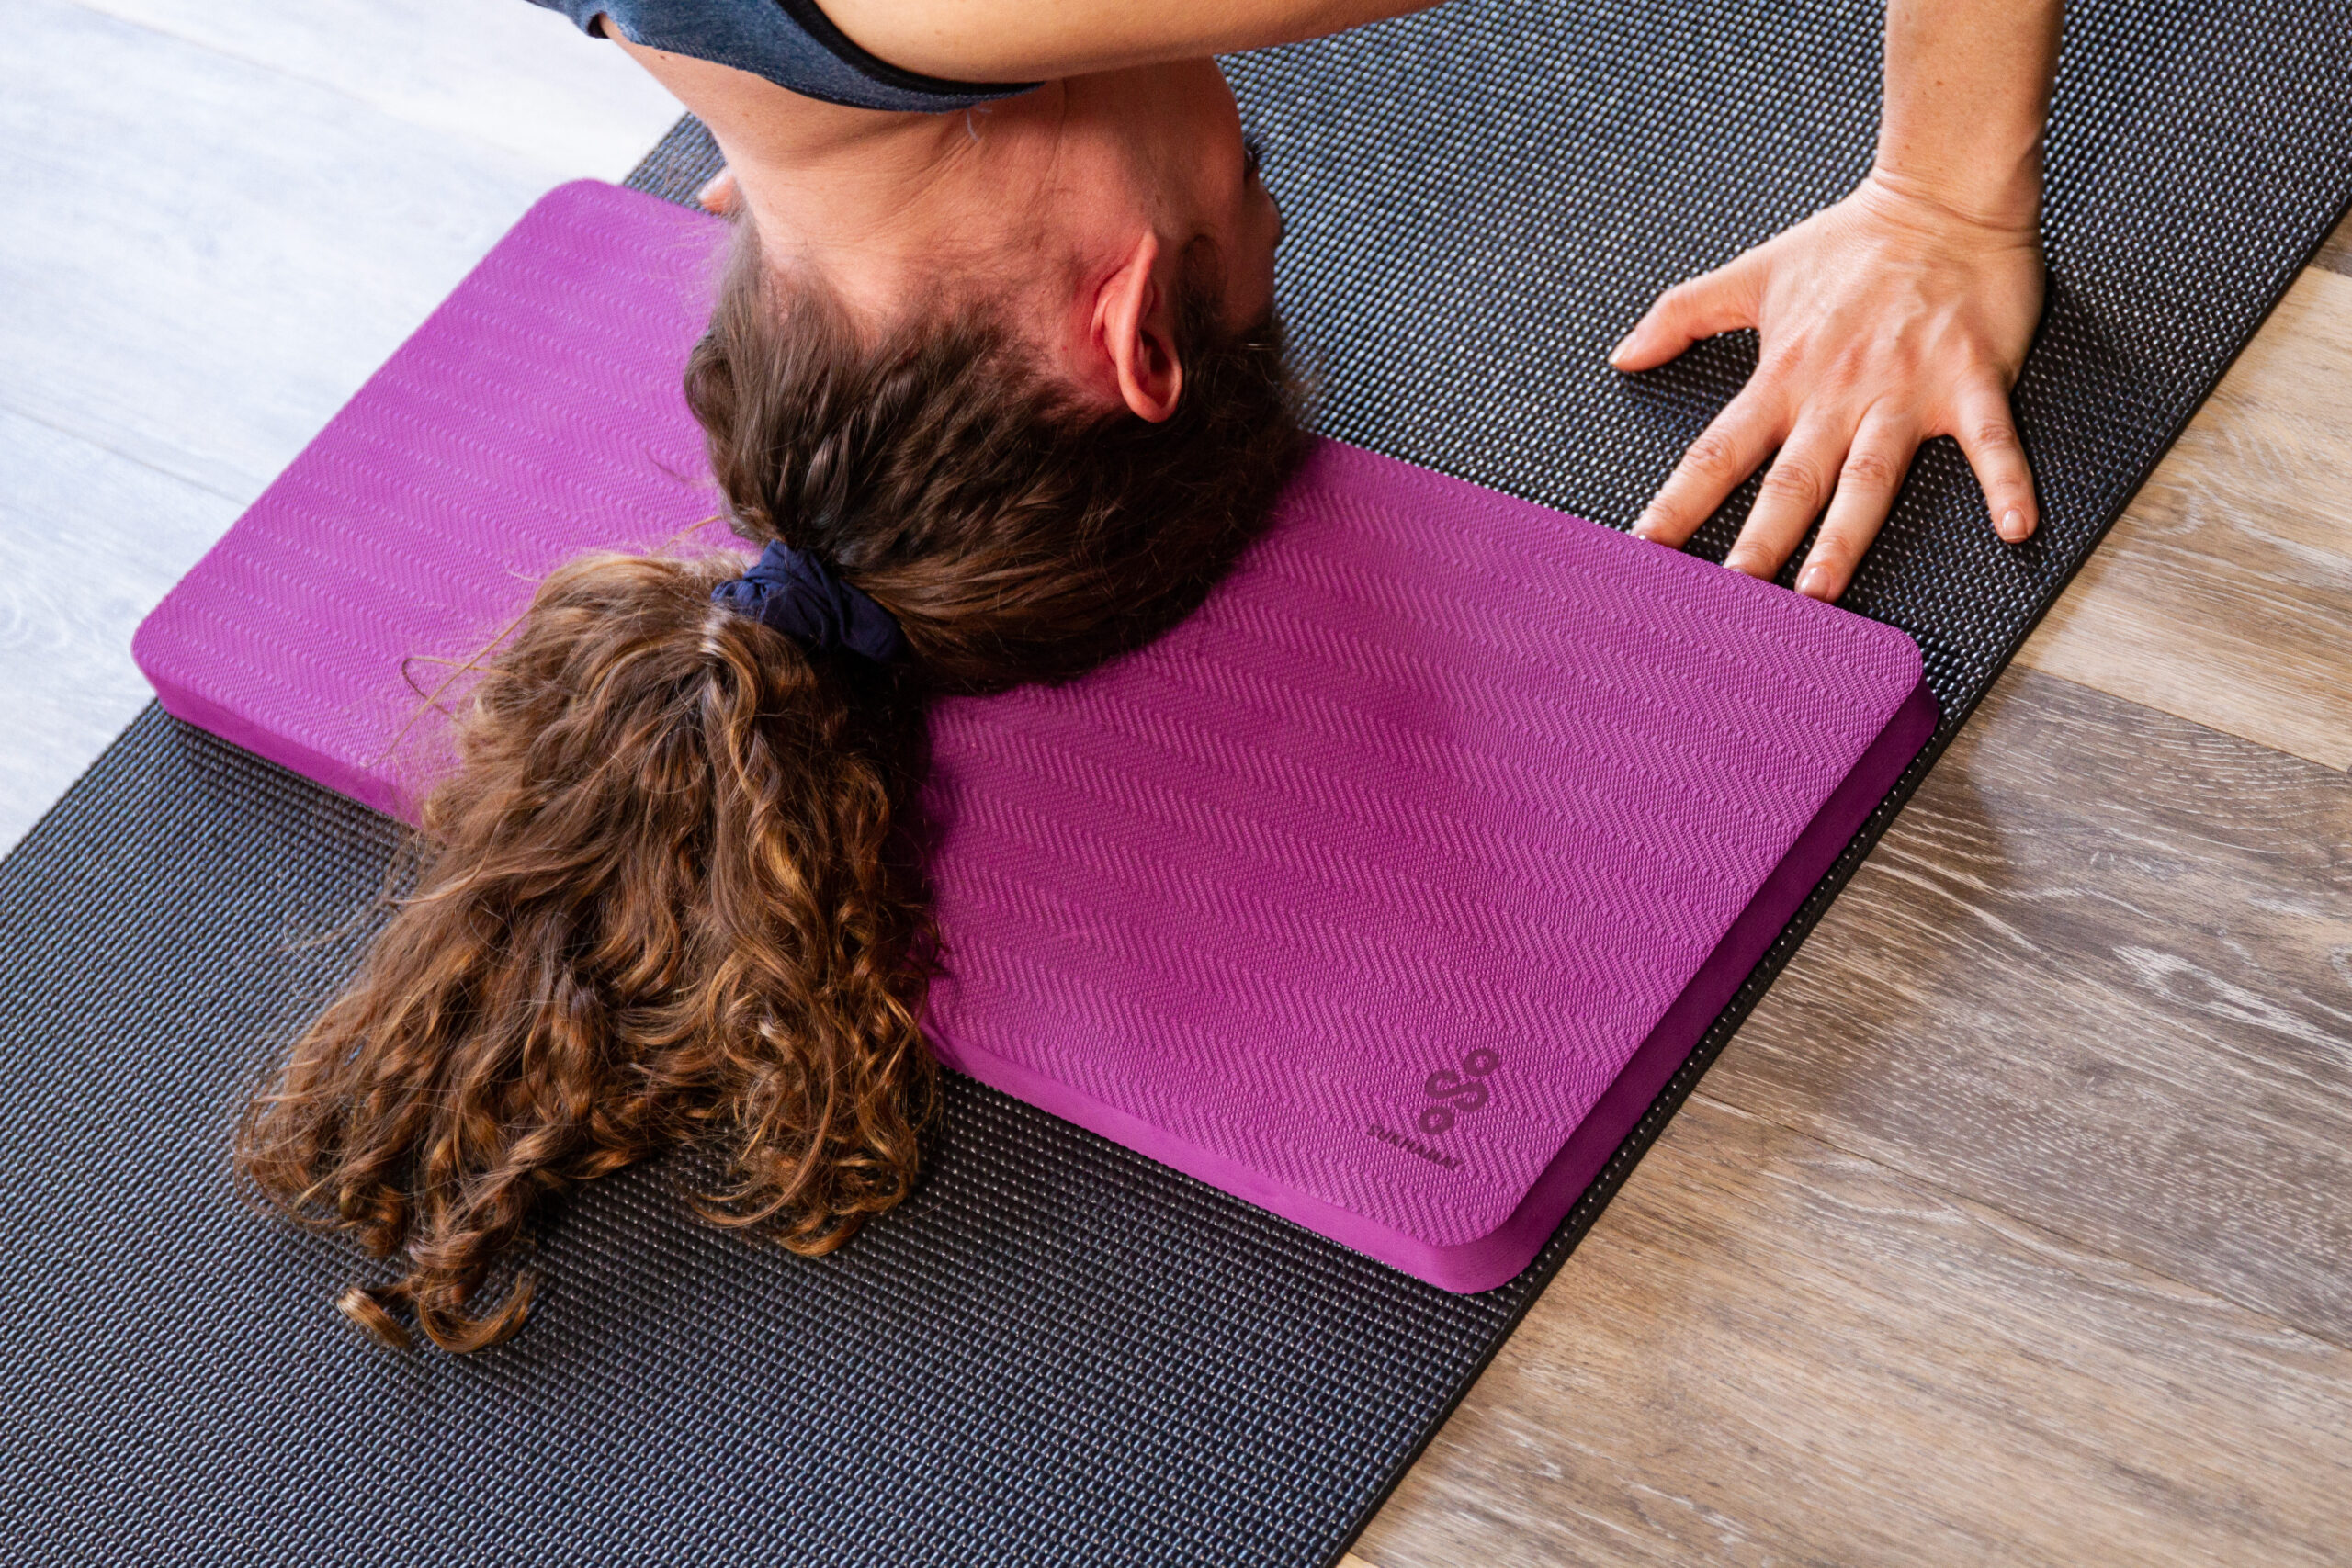  INOOMP 5 Pairs Yoga Support Mat Exercise Knee Pad